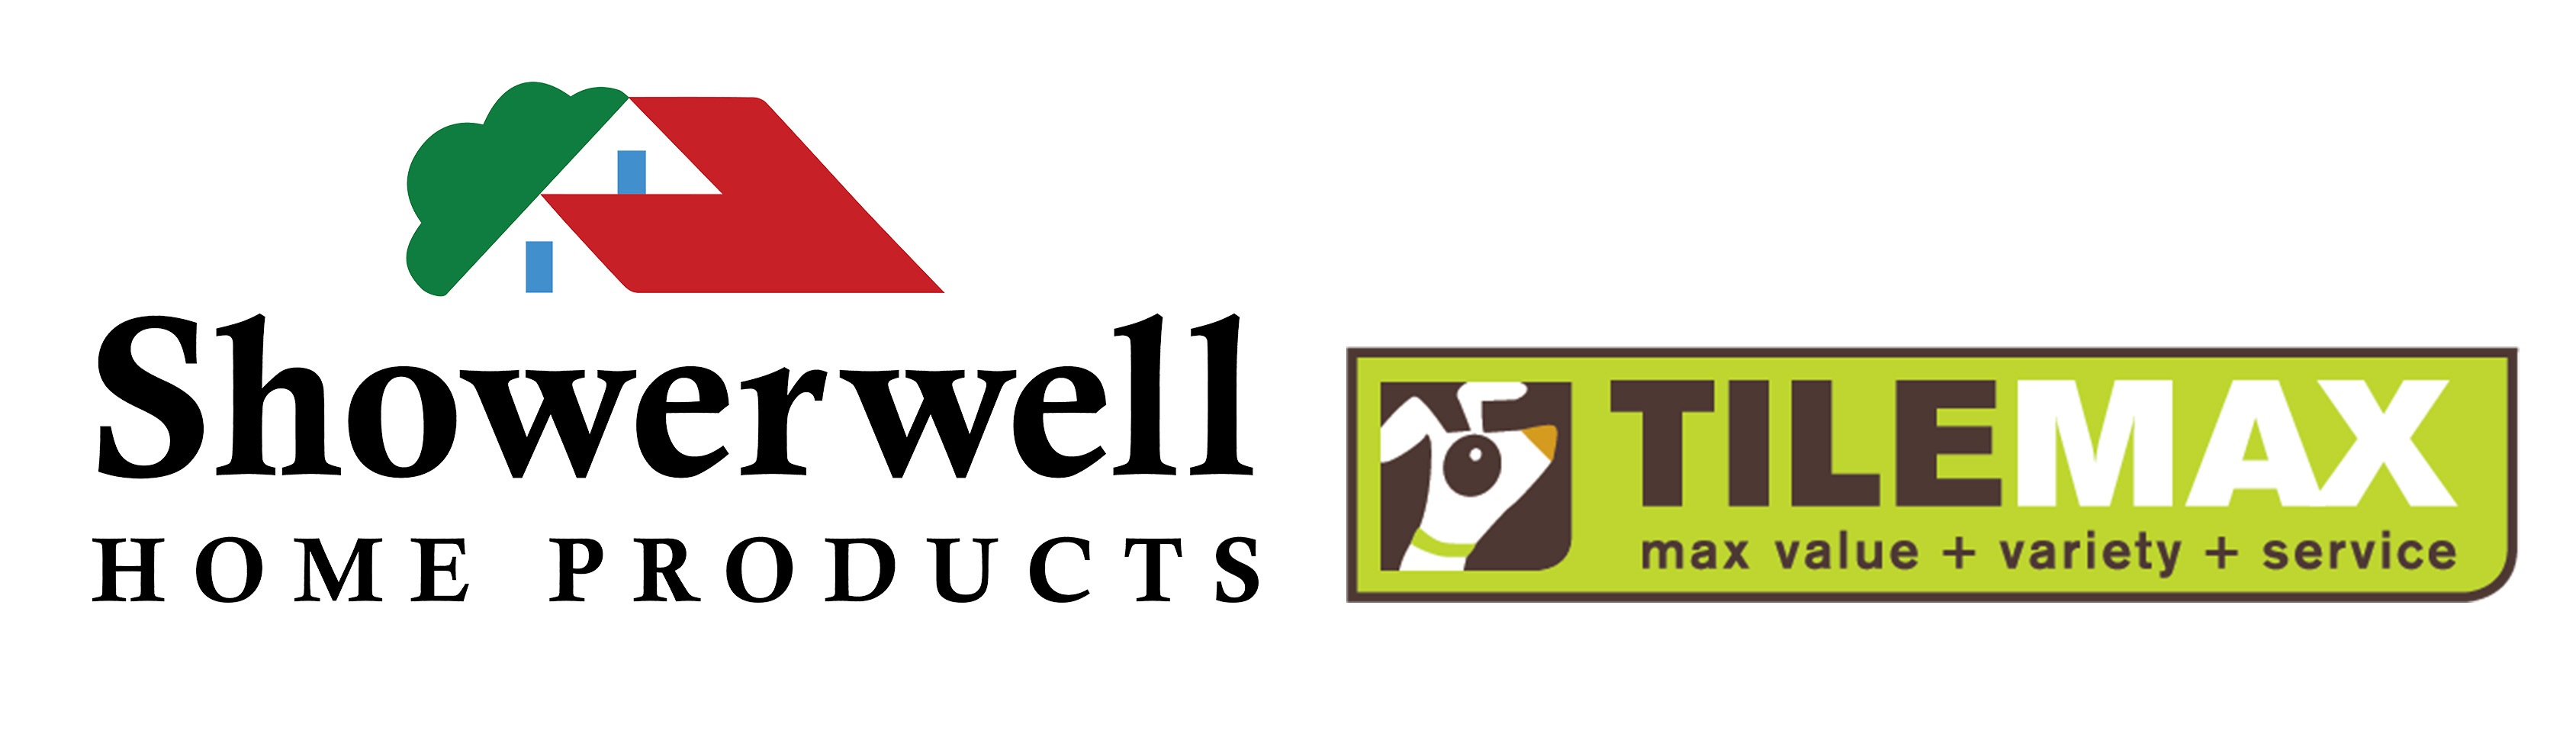 Showerwell + Tilemax logos landscape